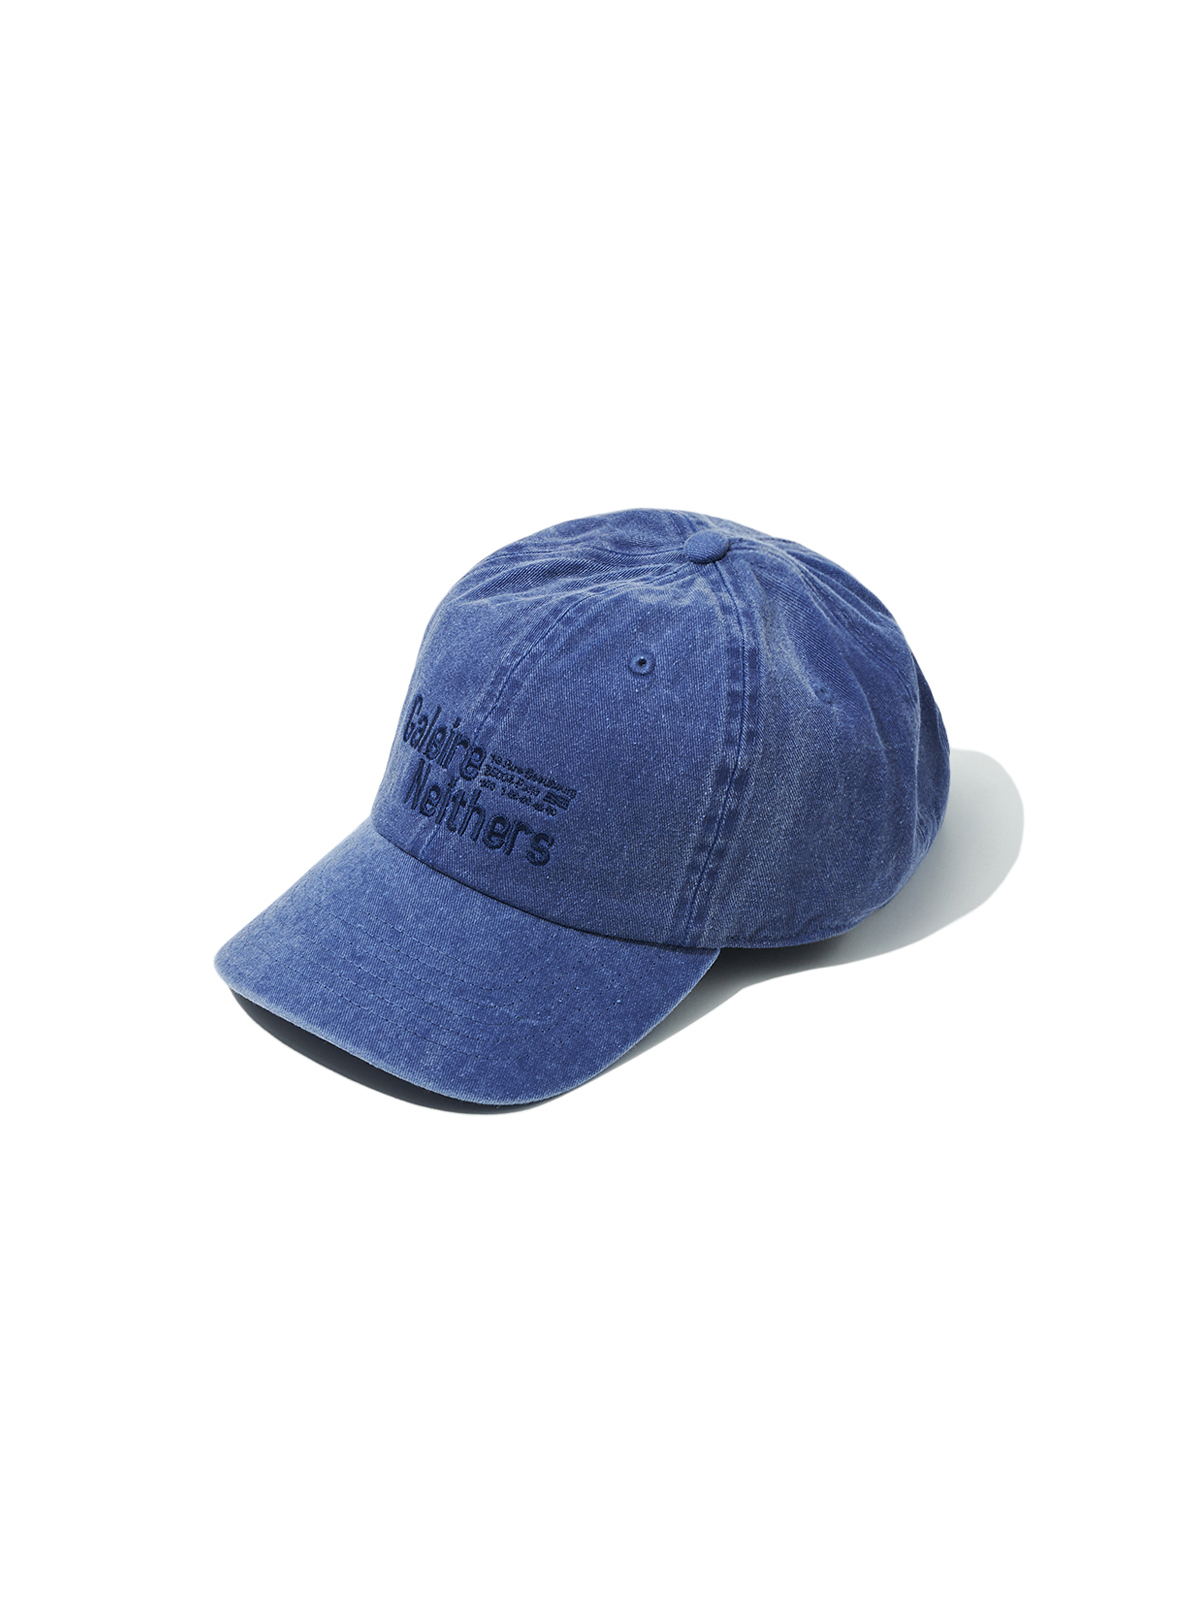 GALERIE CAP (ROYAL BLUE)